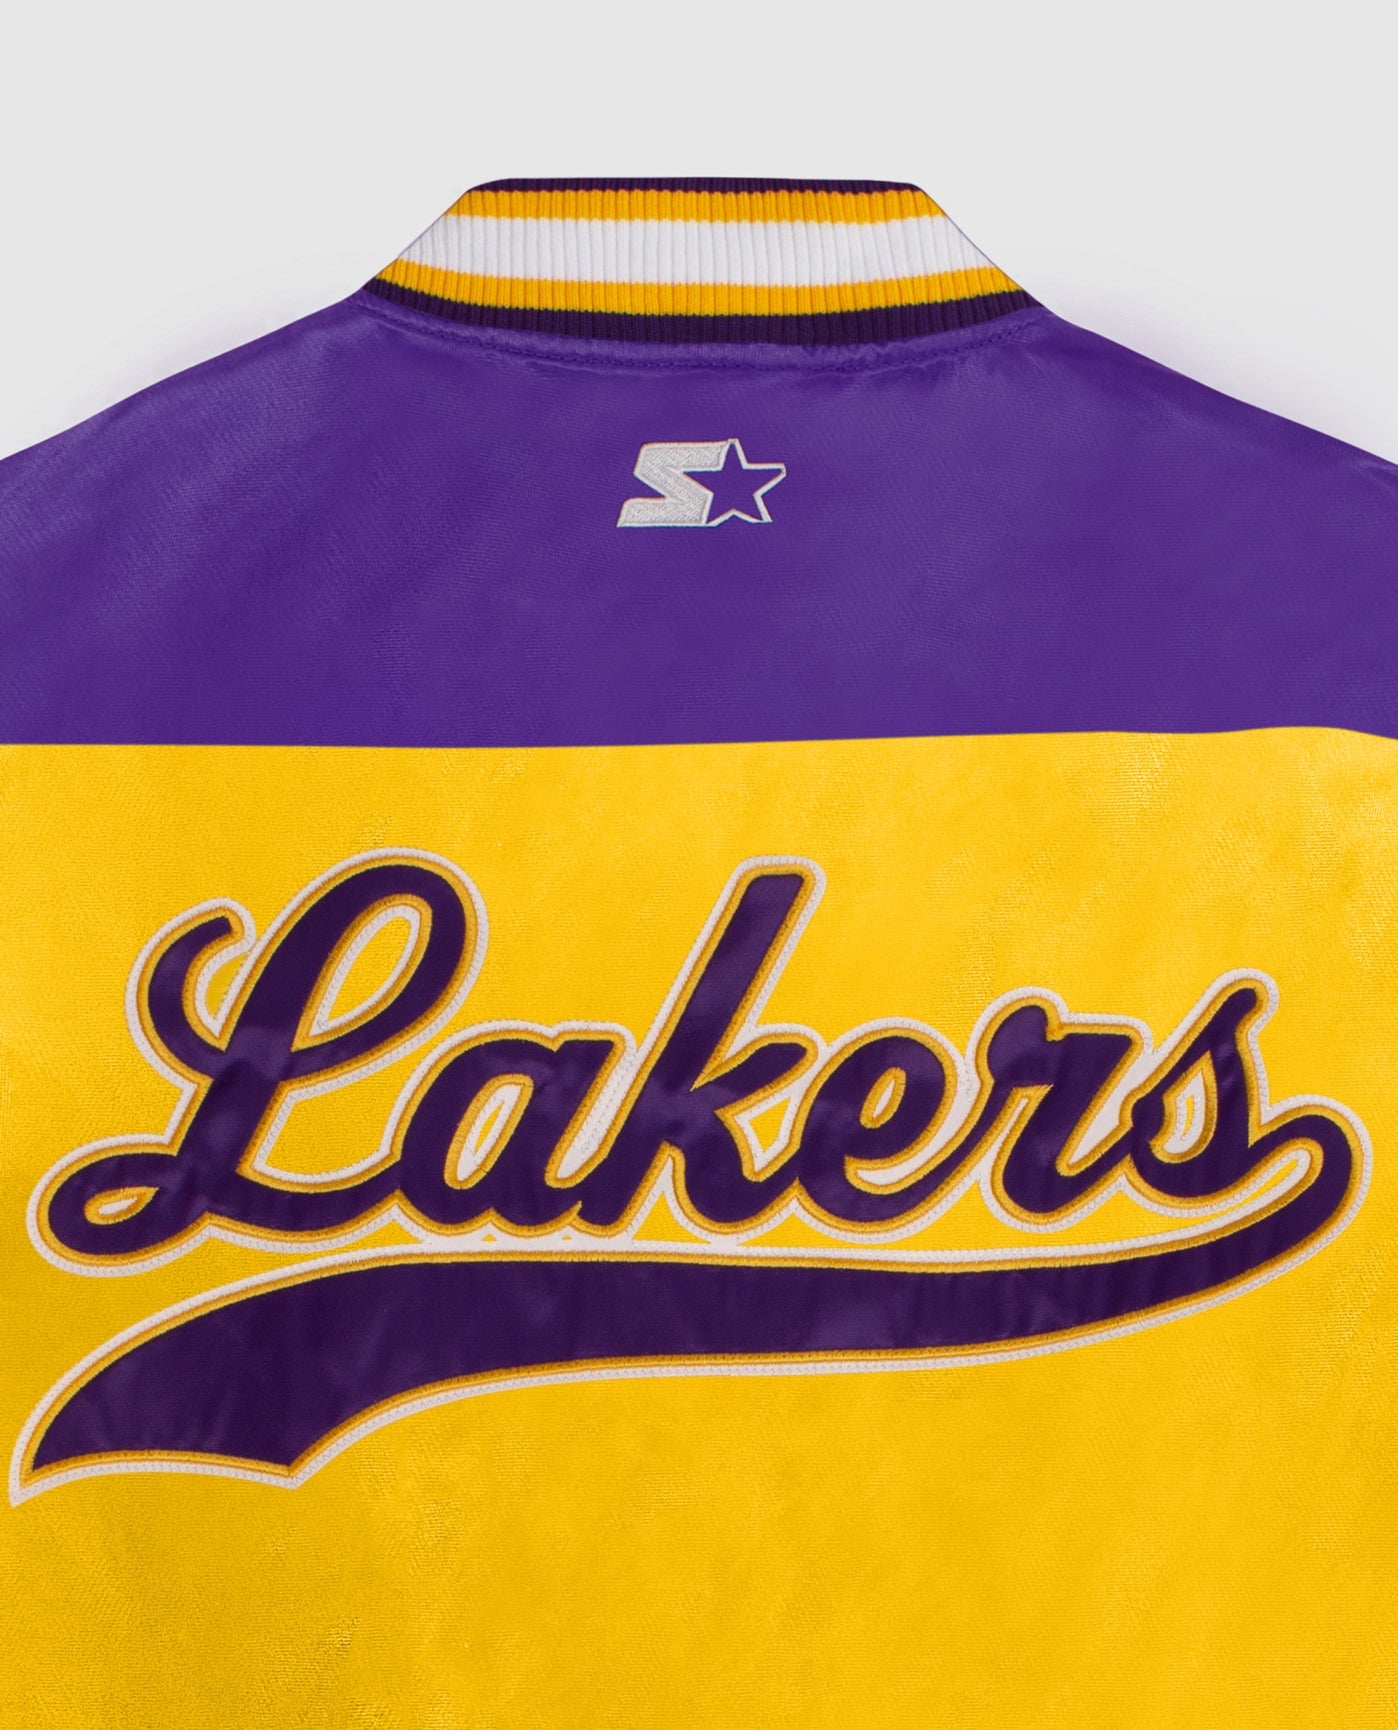 Starter Los Angeles Lakers Yellow Bomber Jacket - Jacket Hub